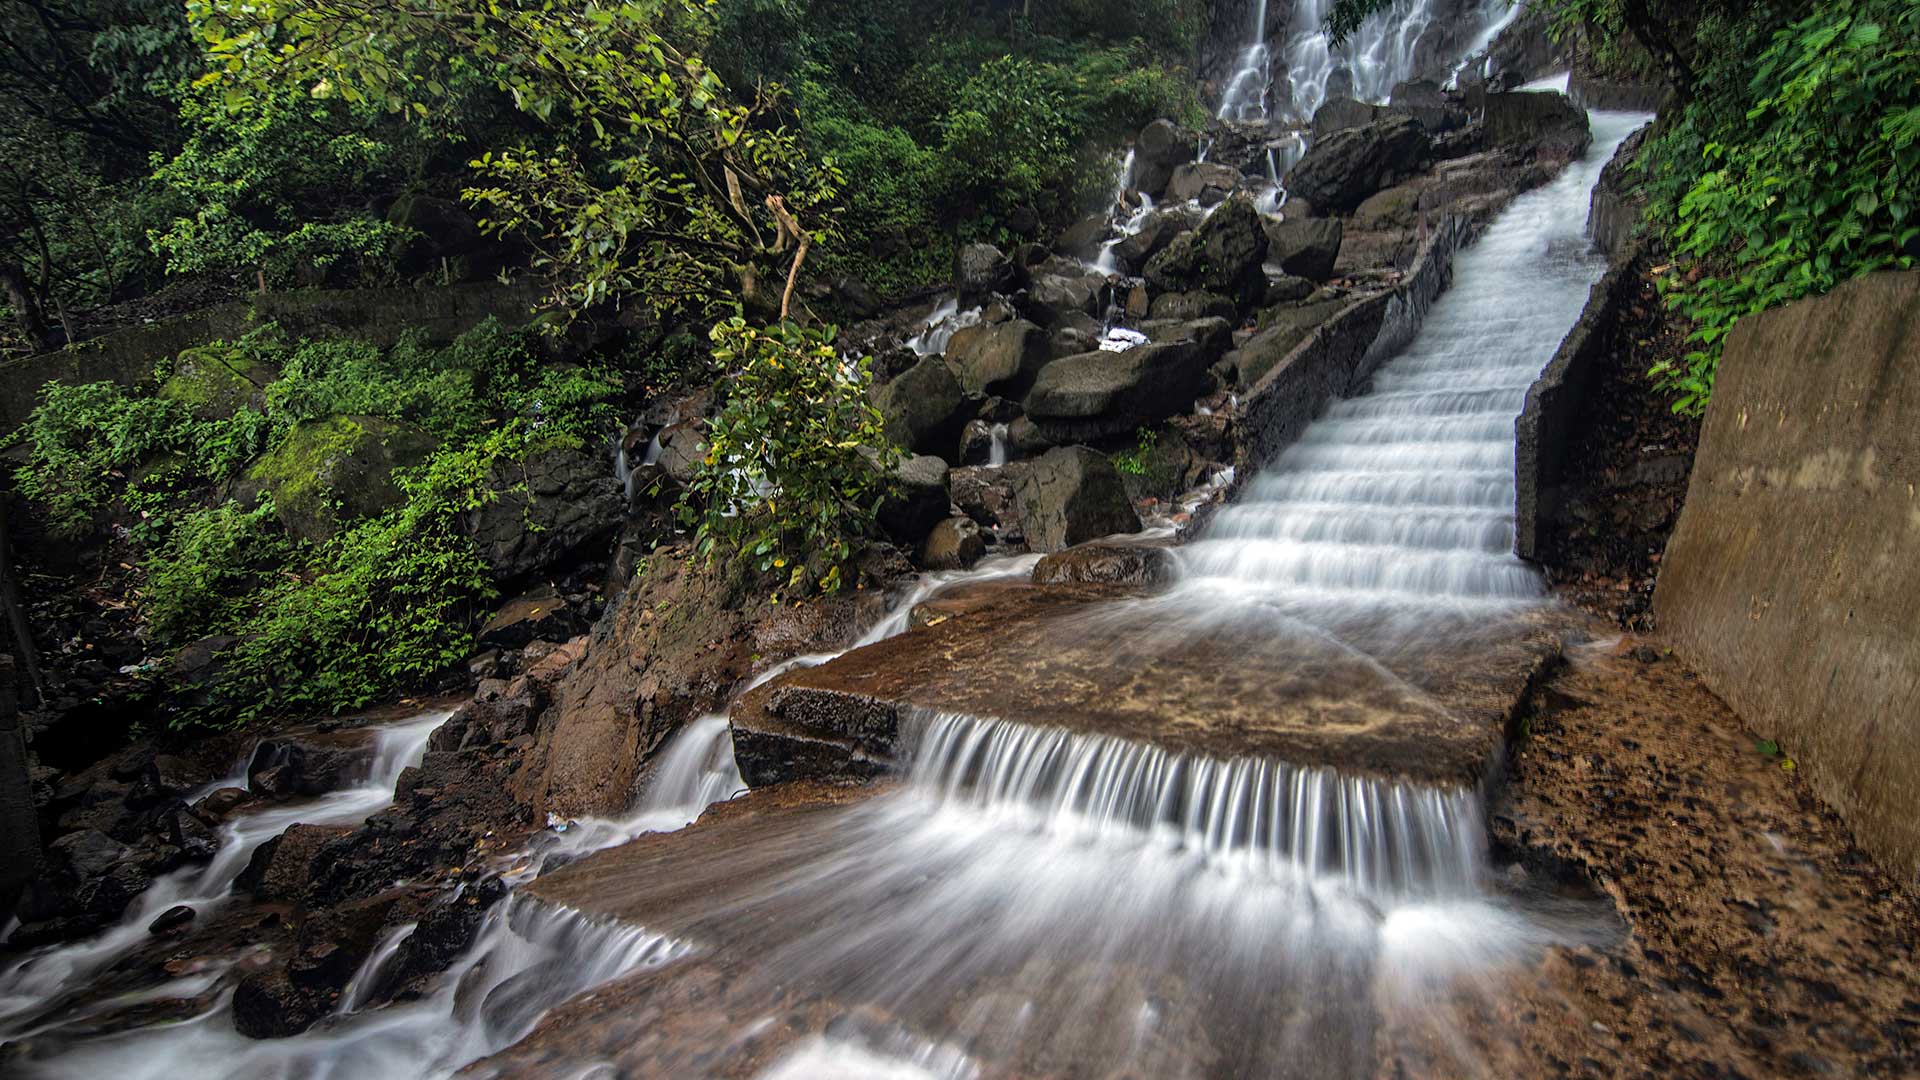 Waterfall in Amboli, Maharashtra, India (? ePhotocorp/iStock/Getty Images Plus)